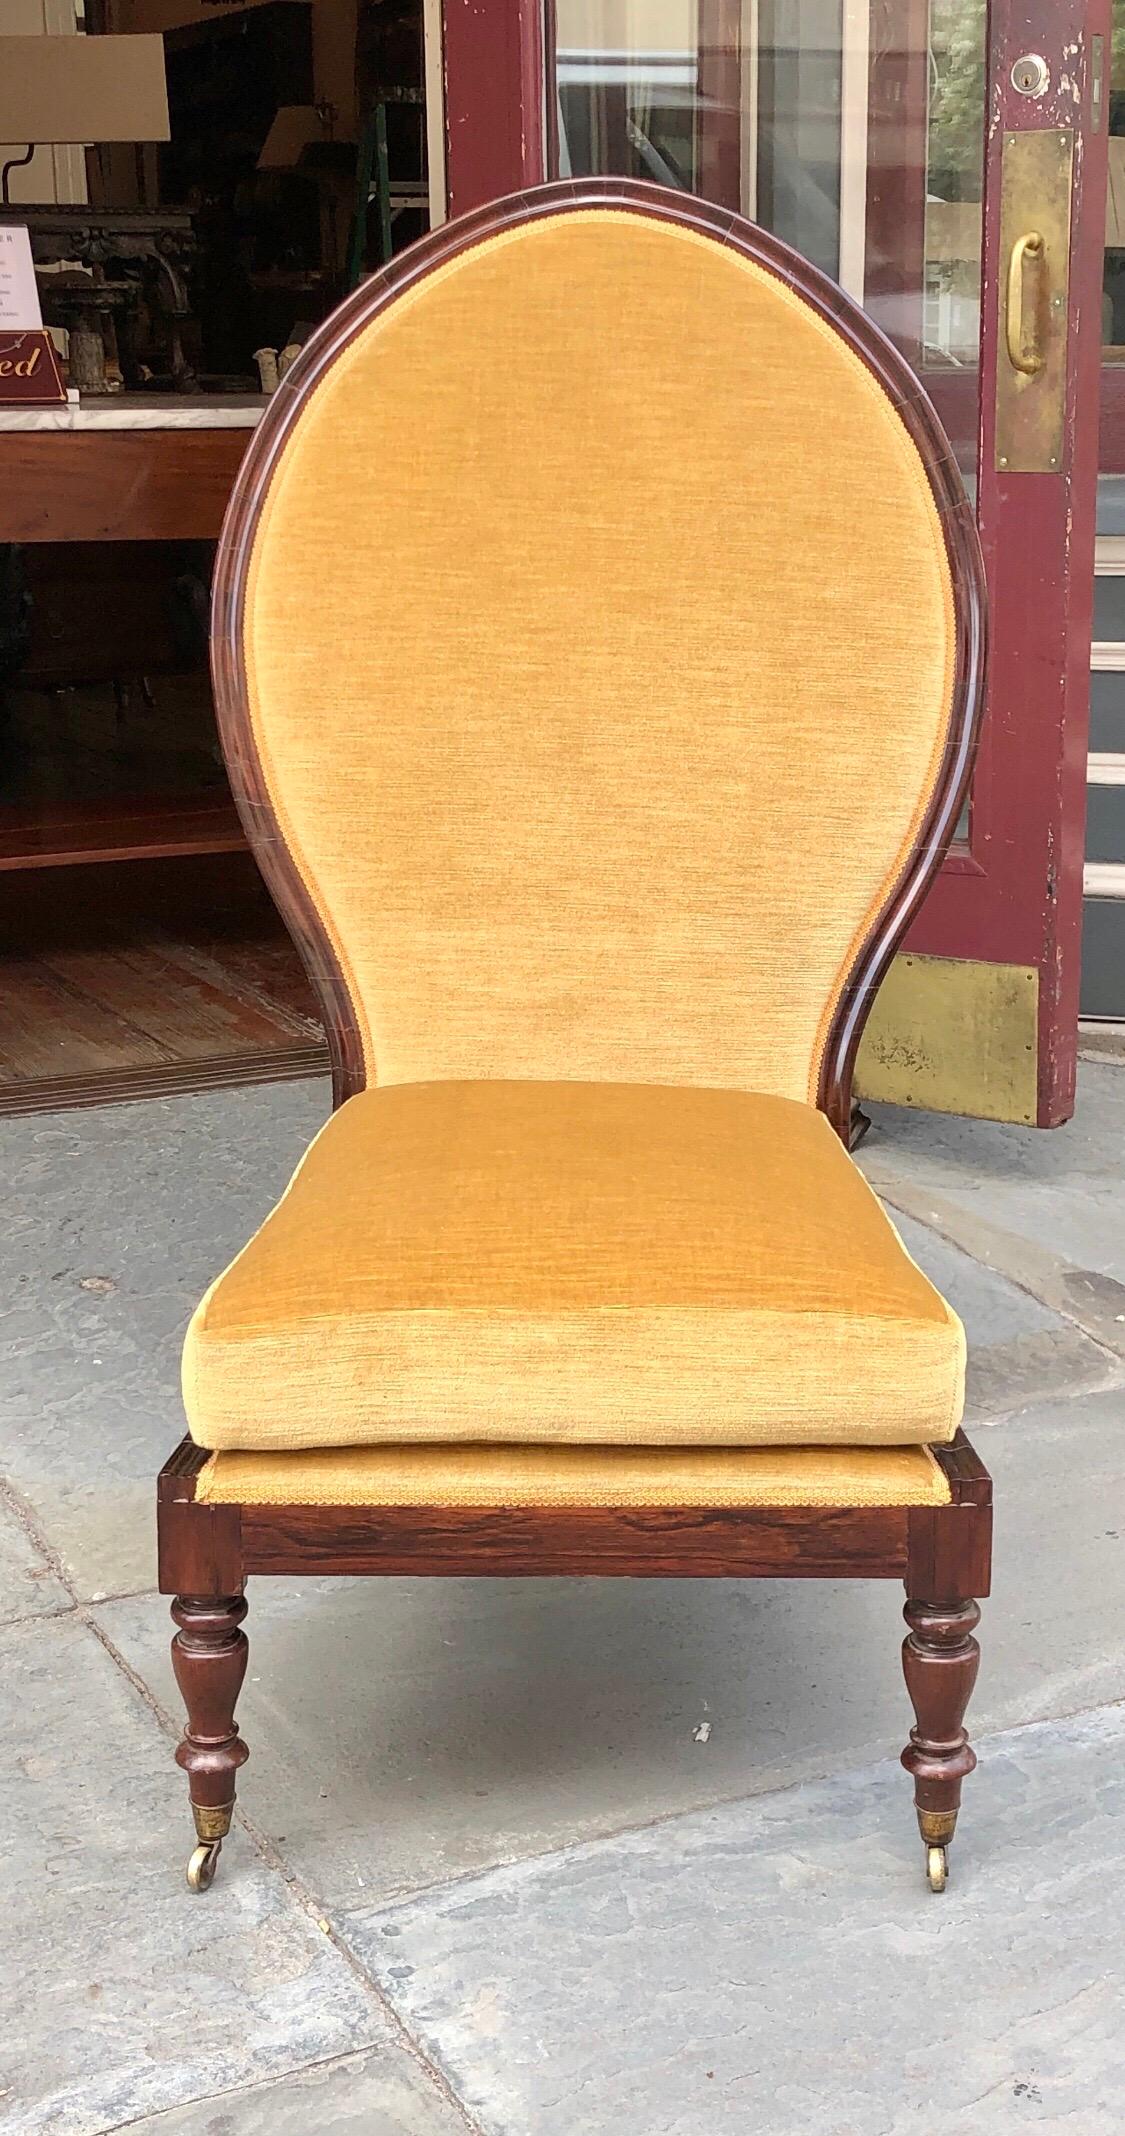 Anglo-Indian East Indies Regency Rosewood Raj Chair, 19th Century